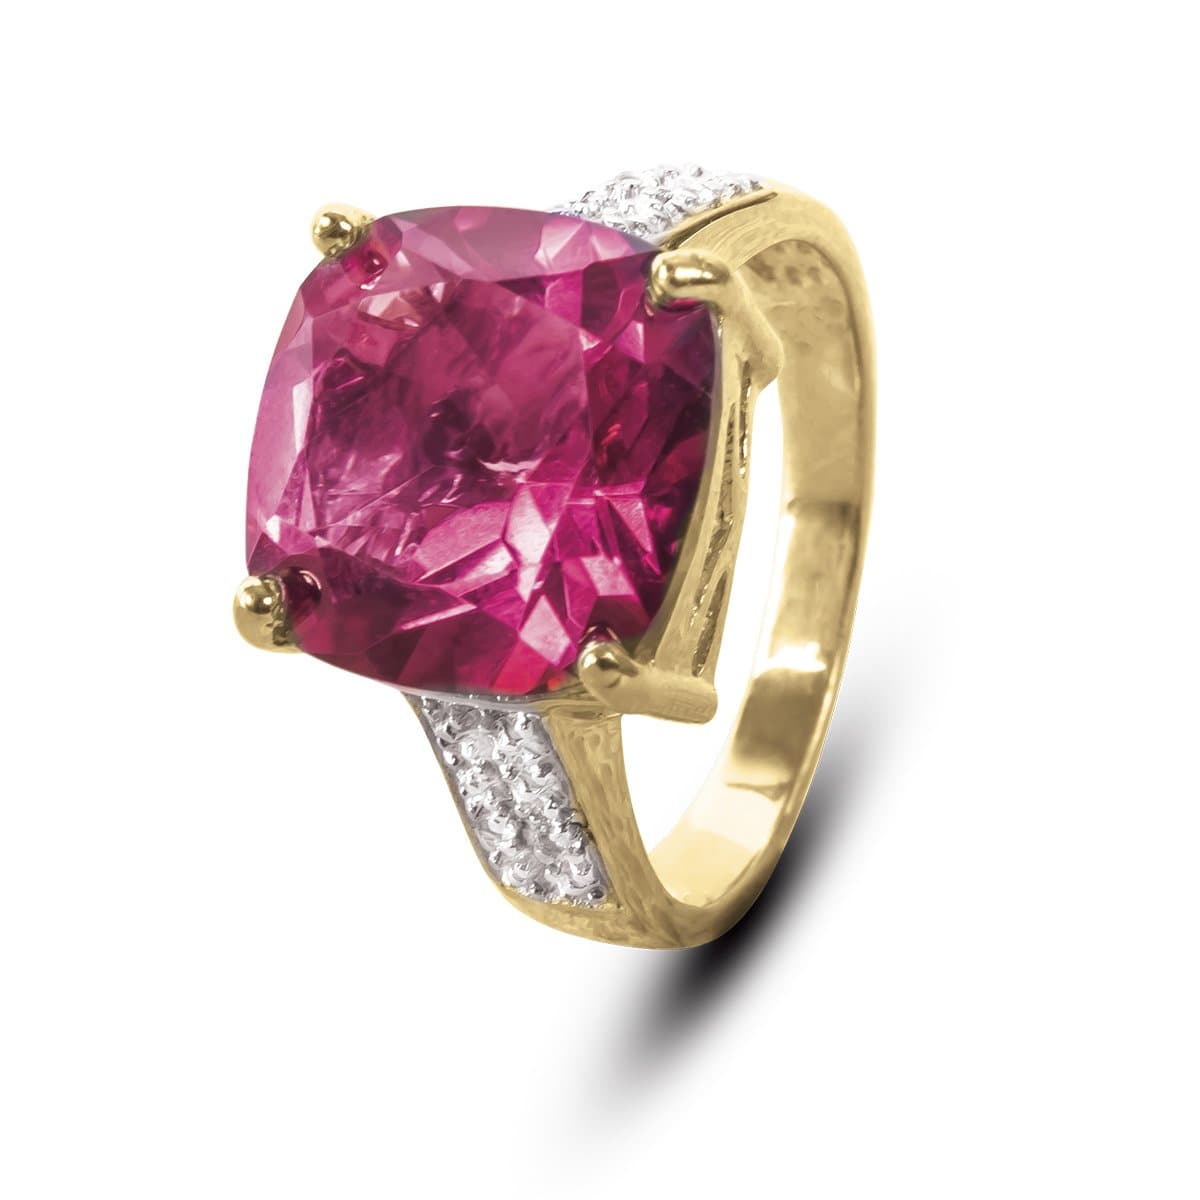 Daniel Steiger Rio Grande Pink Quartz Ring